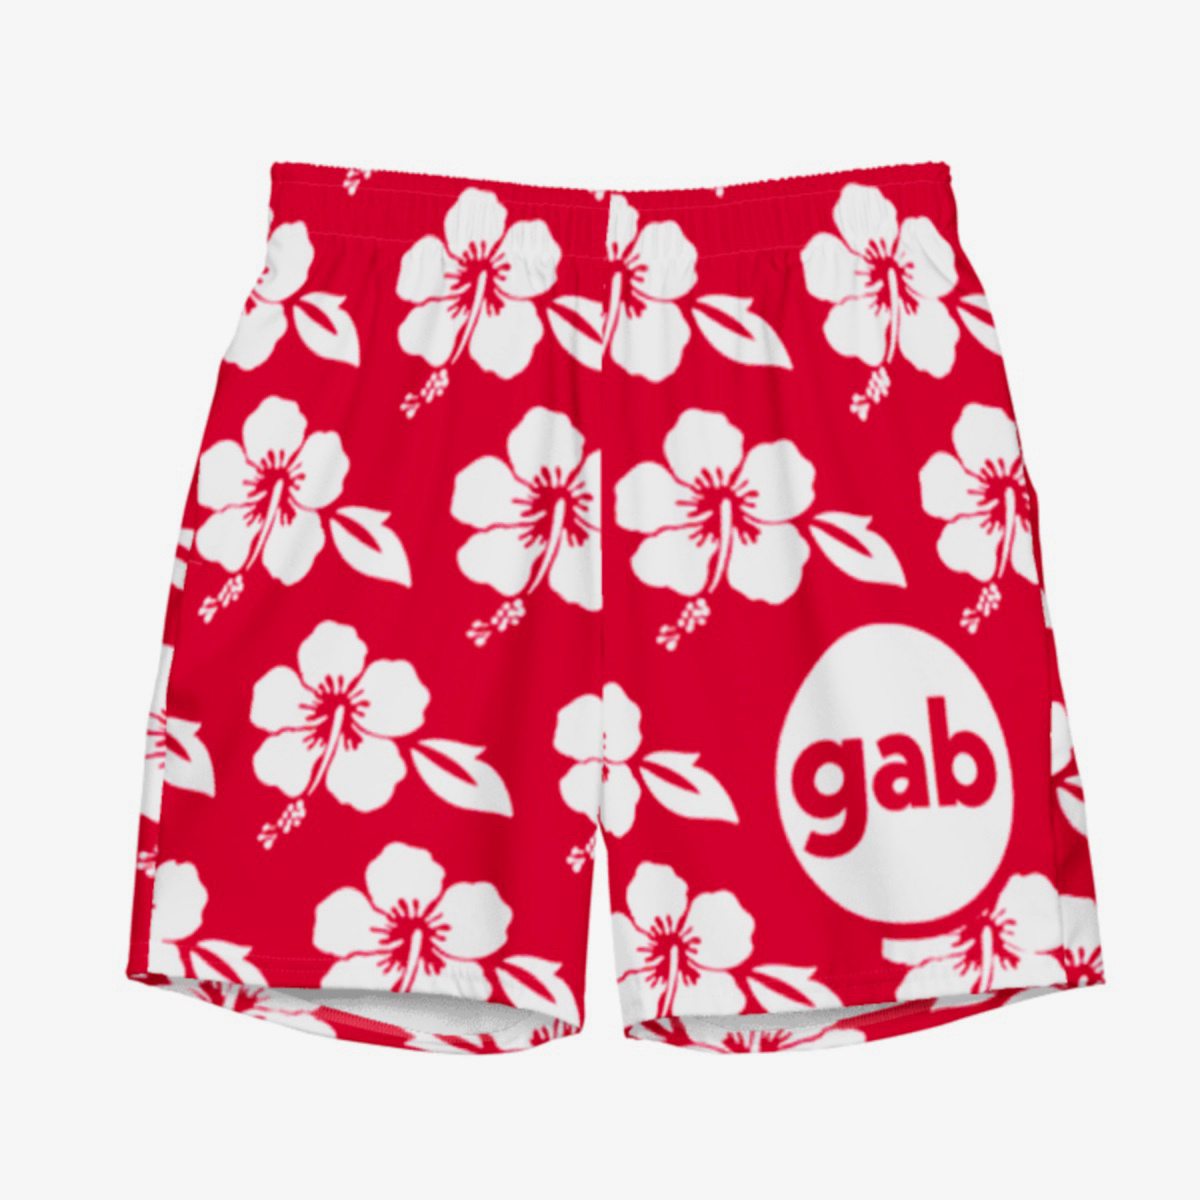 Gab Red Flower Swim Trunks - 4XL